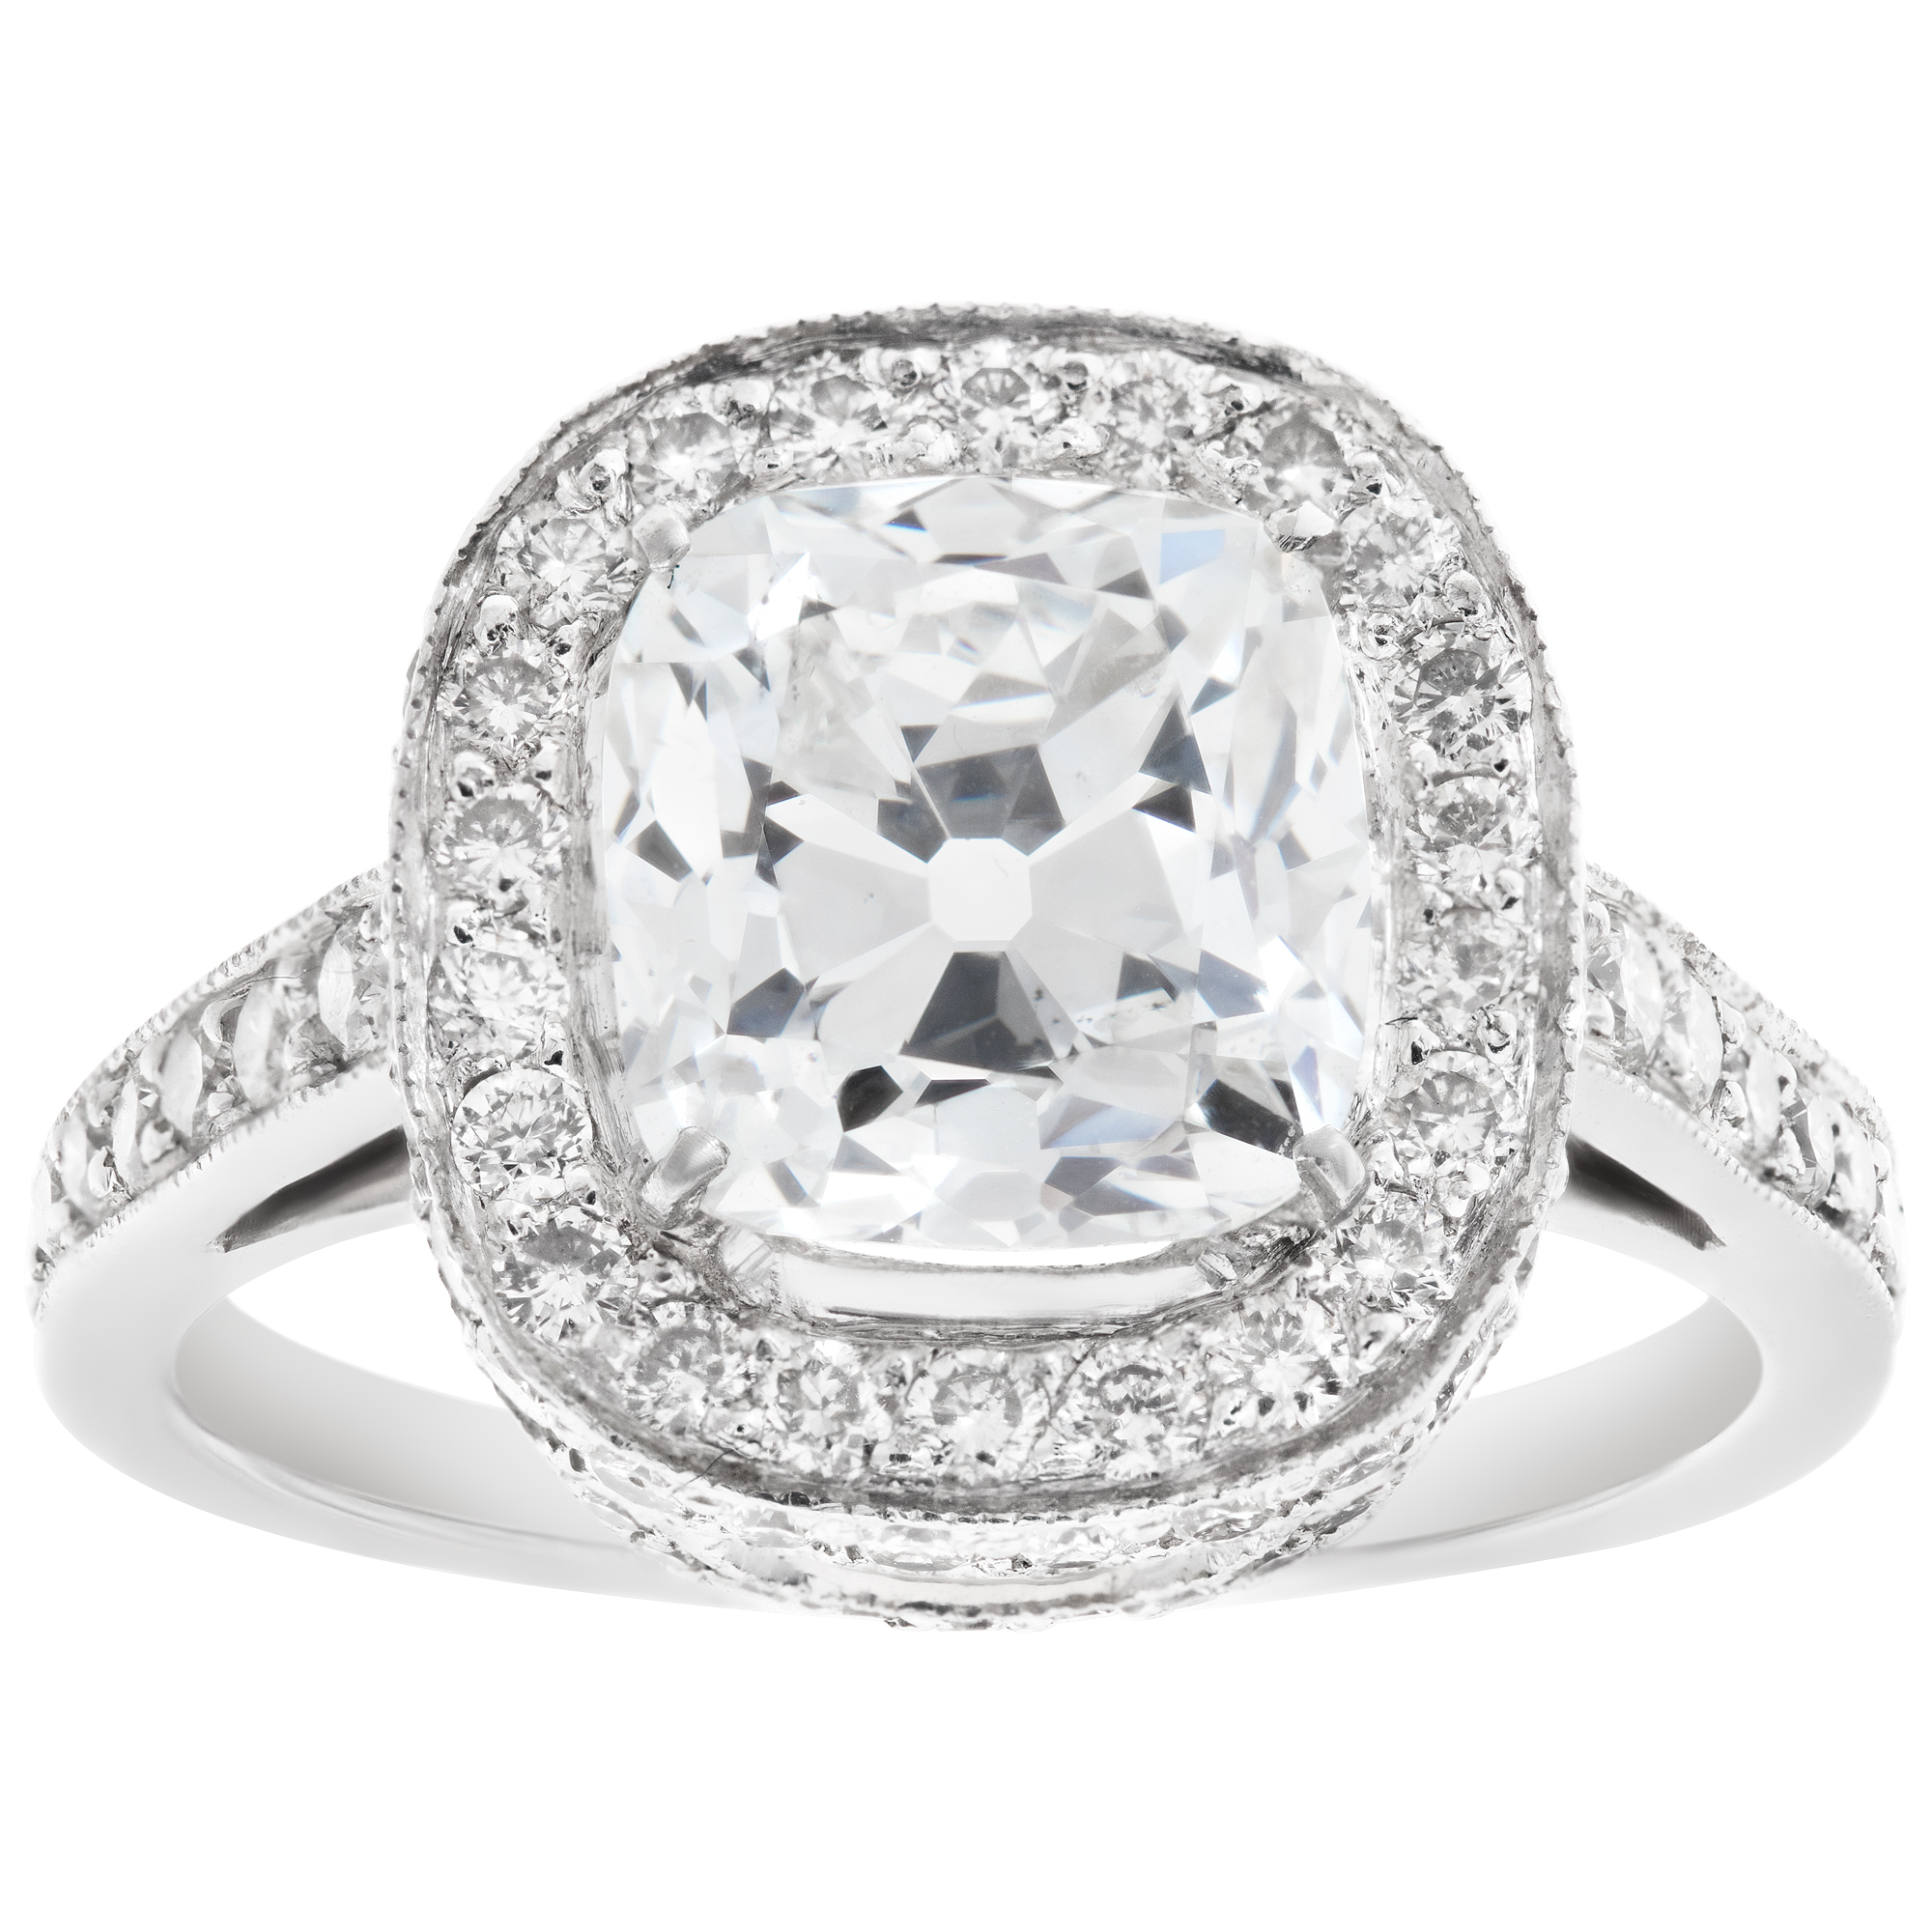 GIA certified cushion brilliant cut diamond 3.02 carat (I color, SI1 clarity) ring